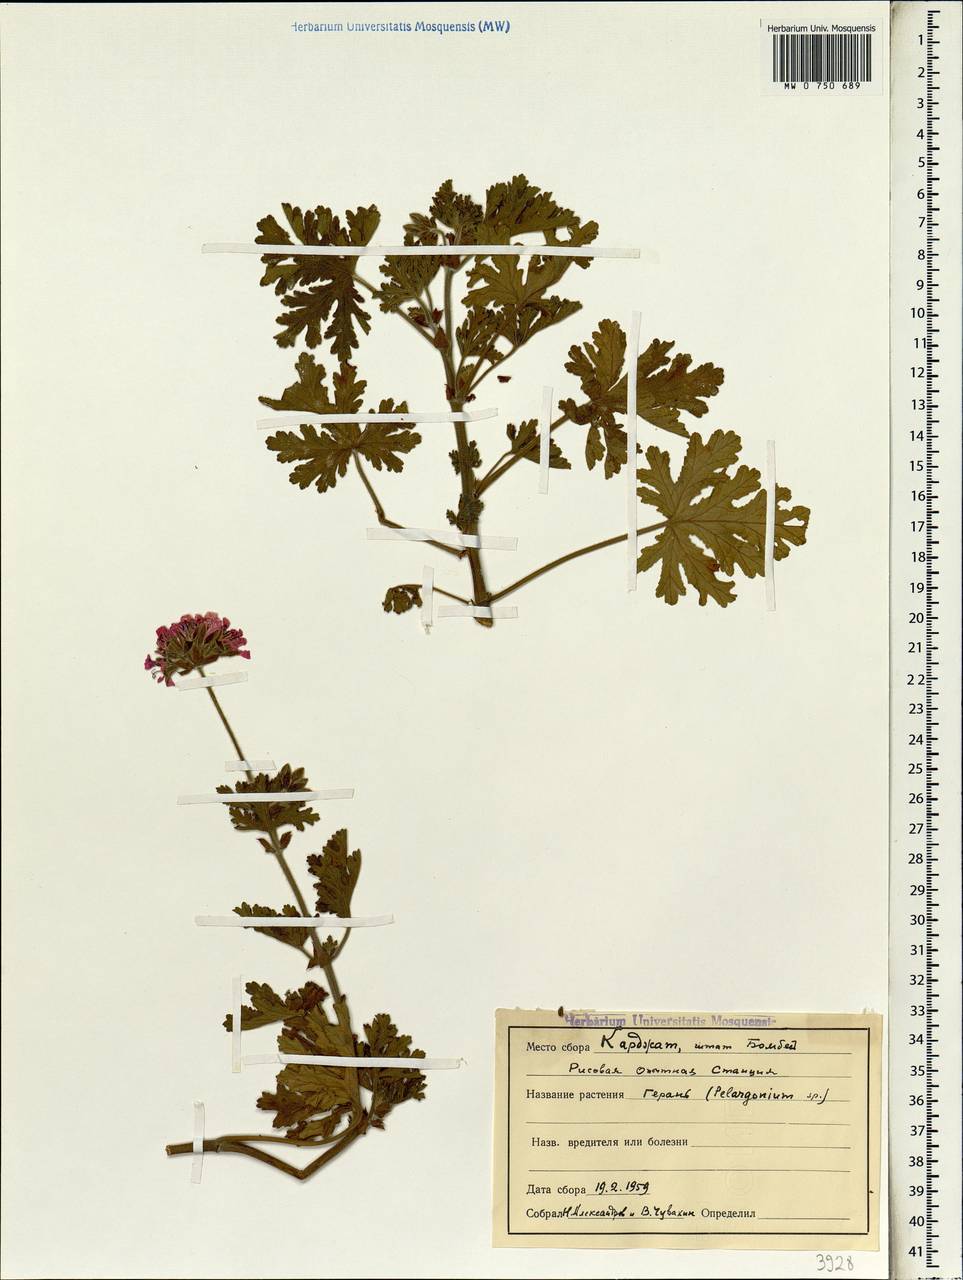 Pelargonium, South Asia, South Asia (Asia outside ex-Soviet states and Mongolia) (ASIA) (India)